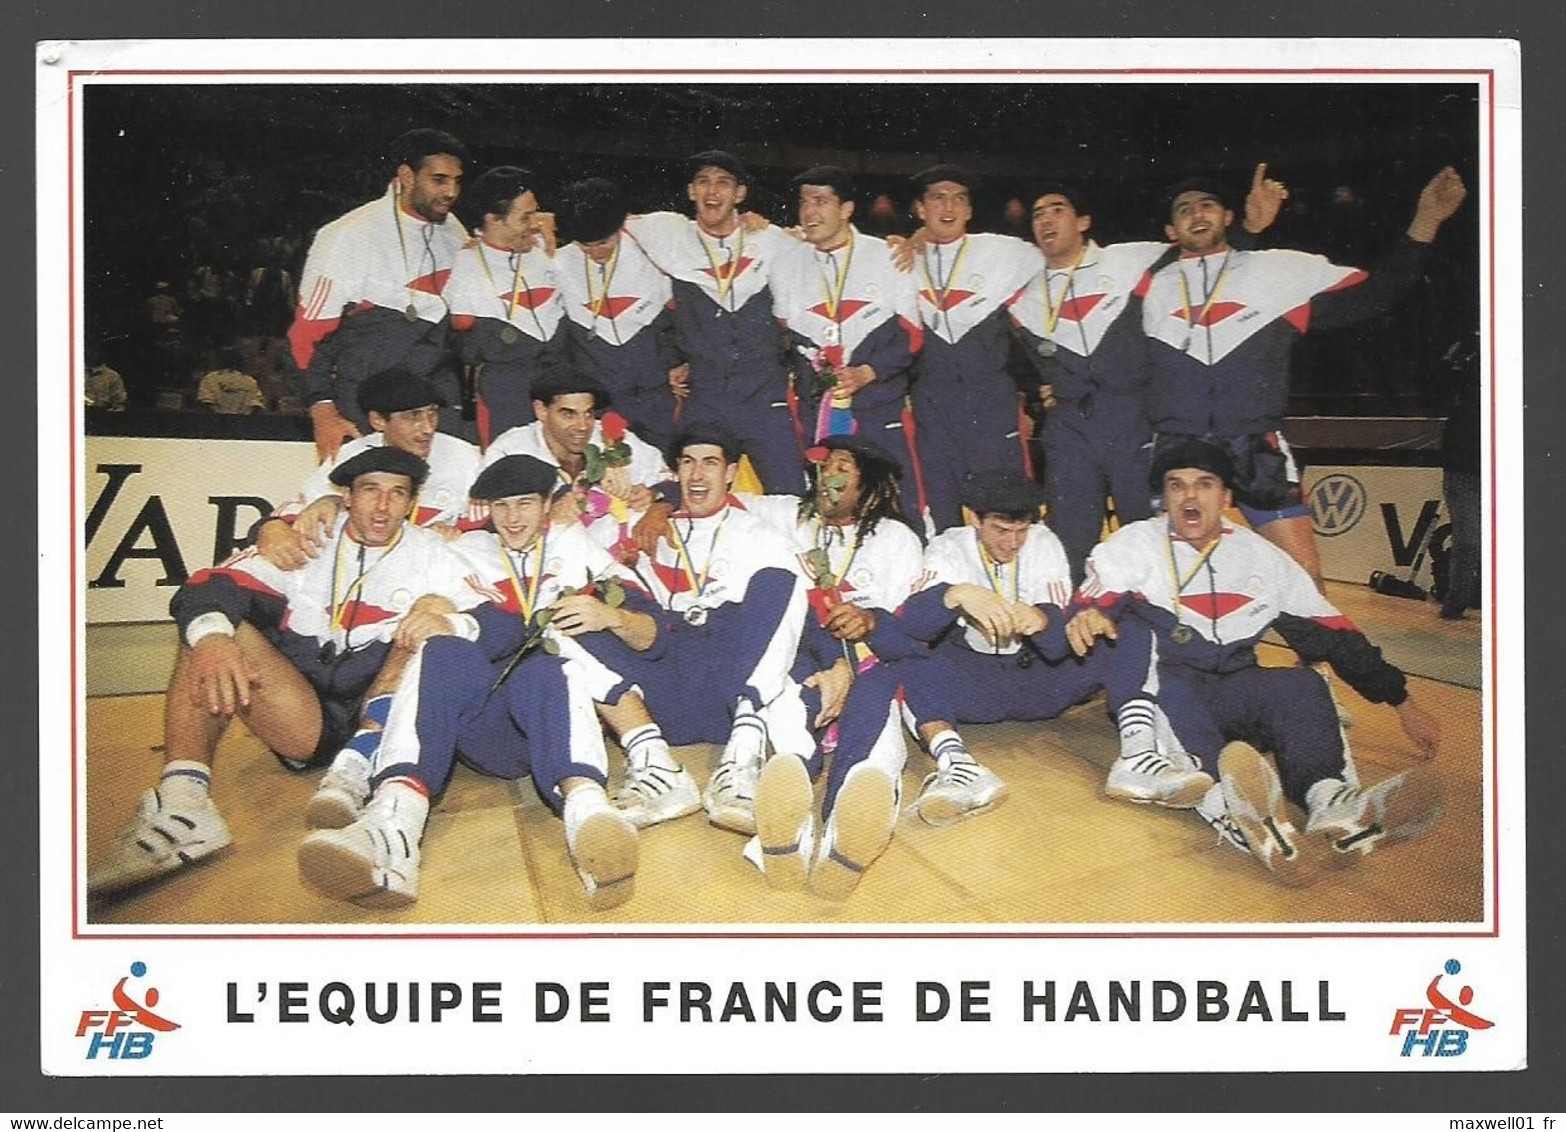 I6 - Equipe De France De Handball 1993 FFHB - Pallamano